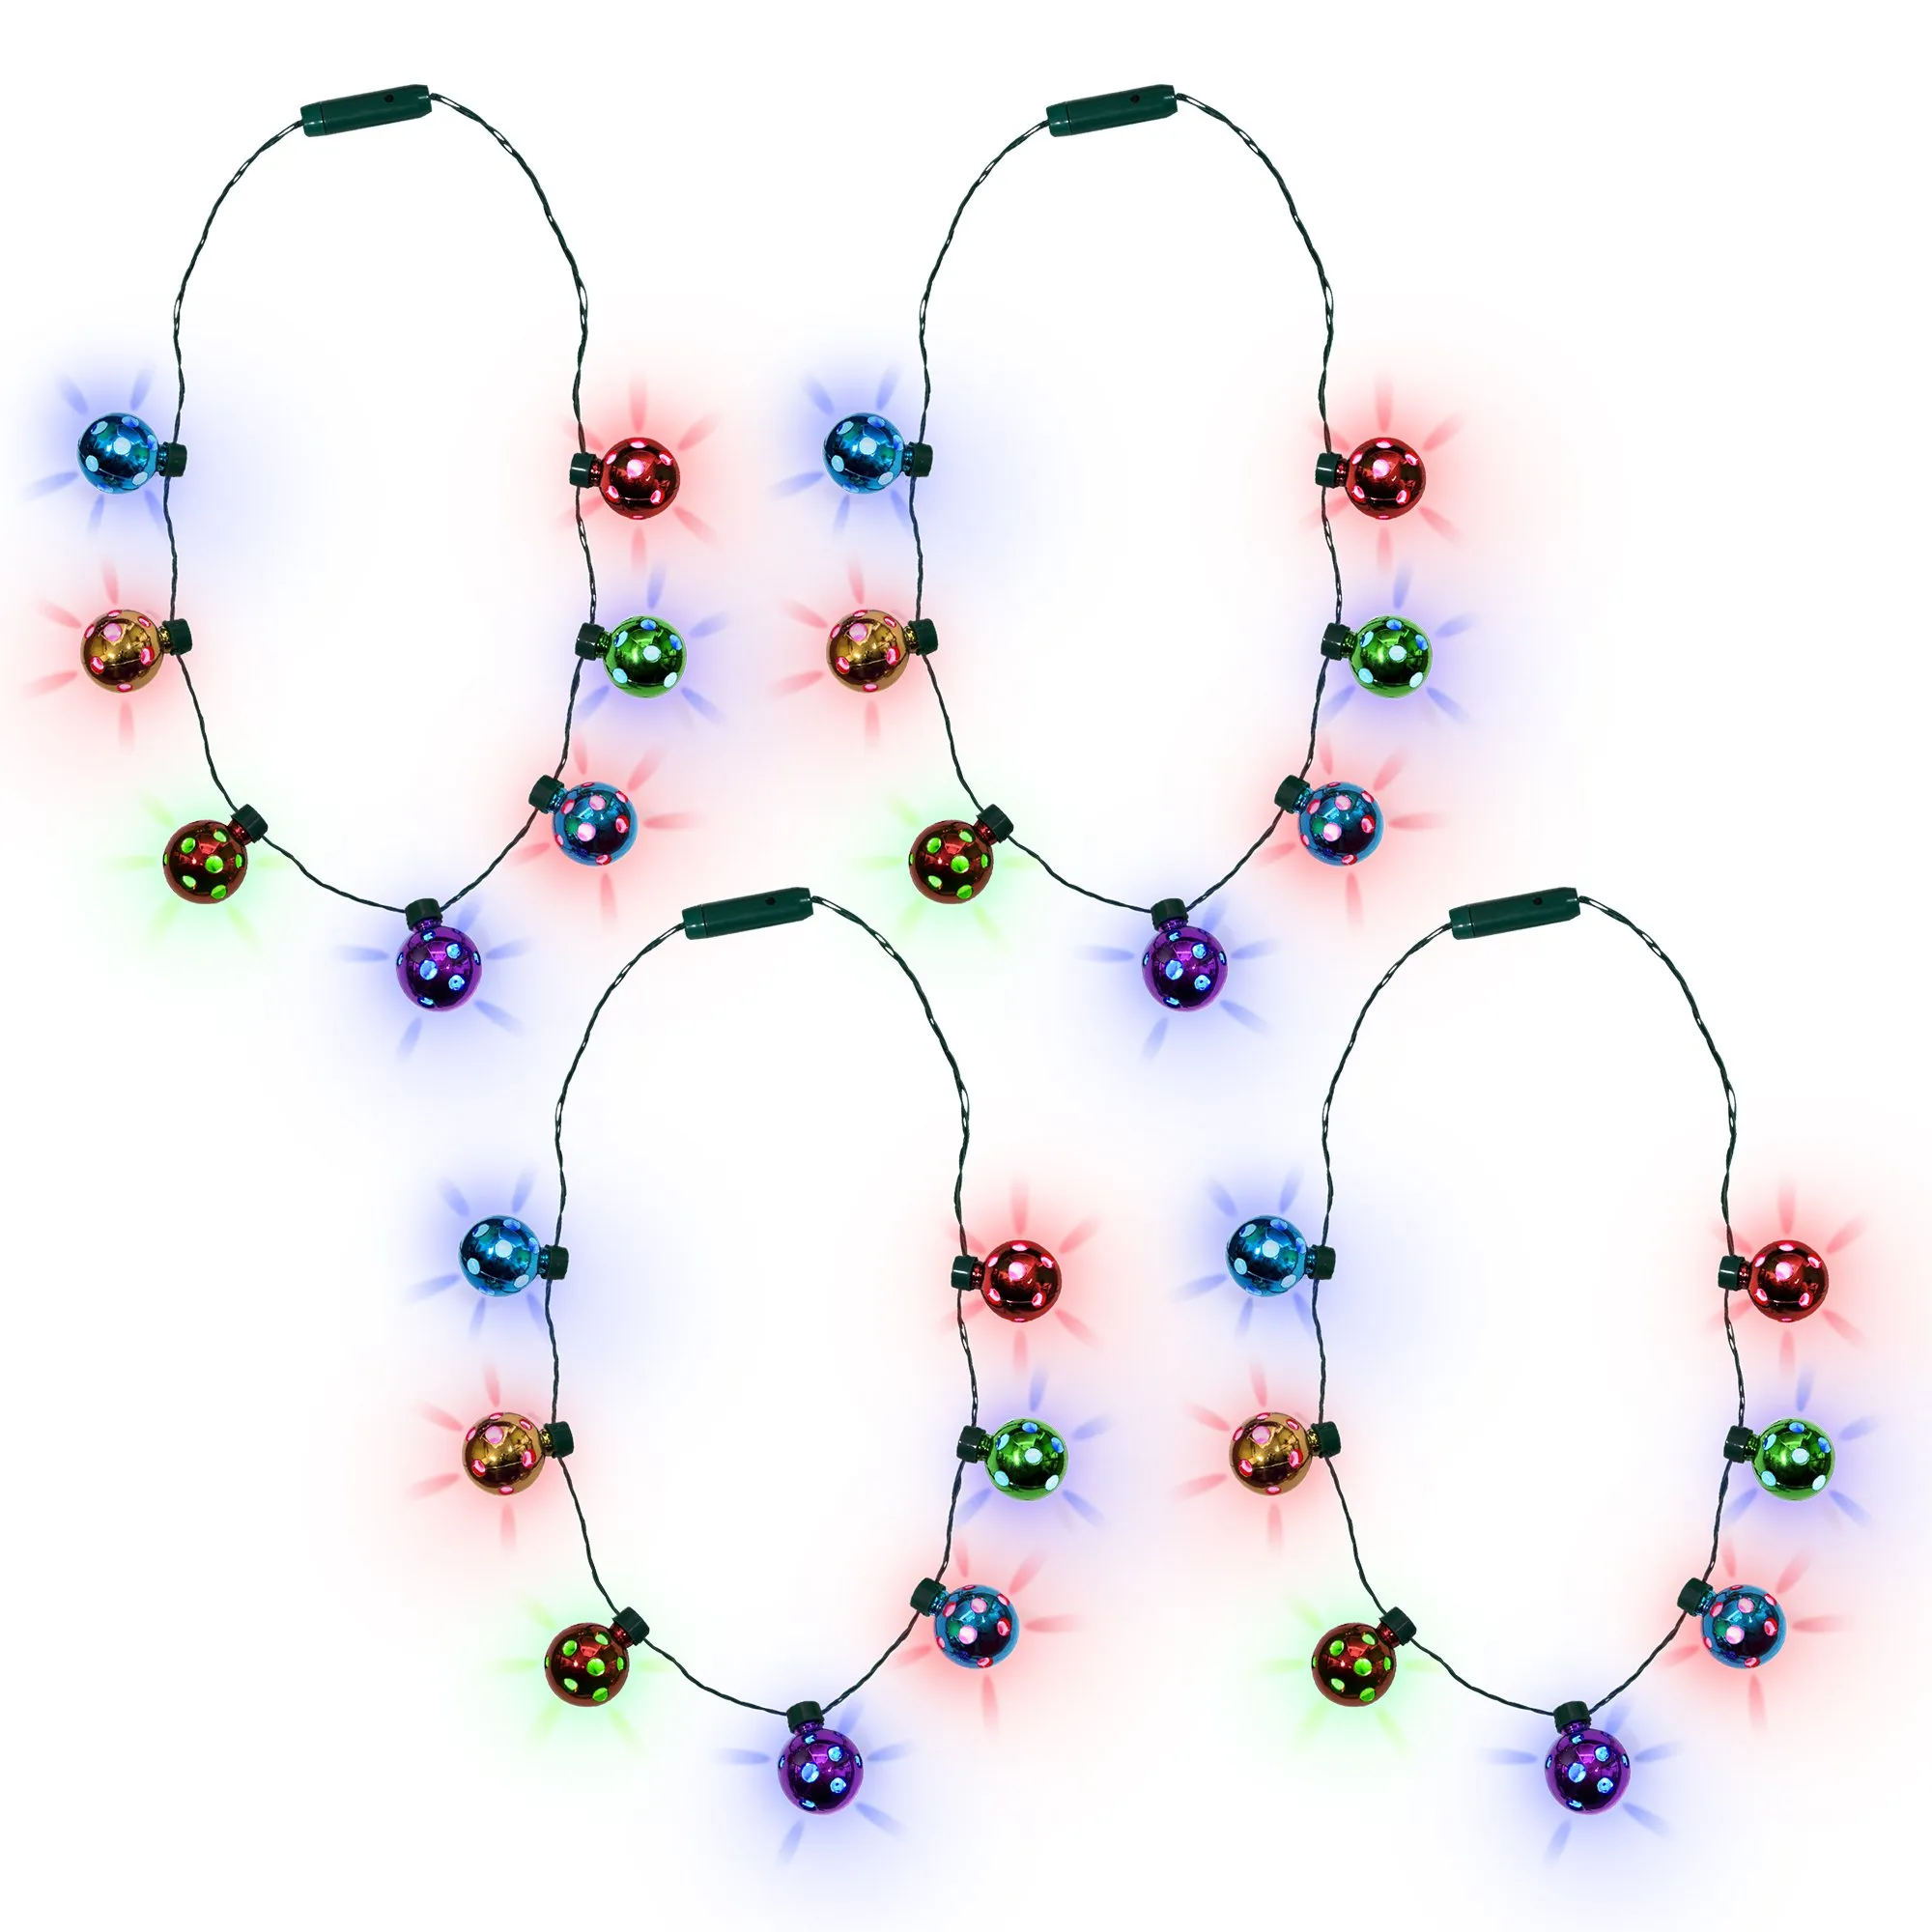 light up led mardi gras beads necklace